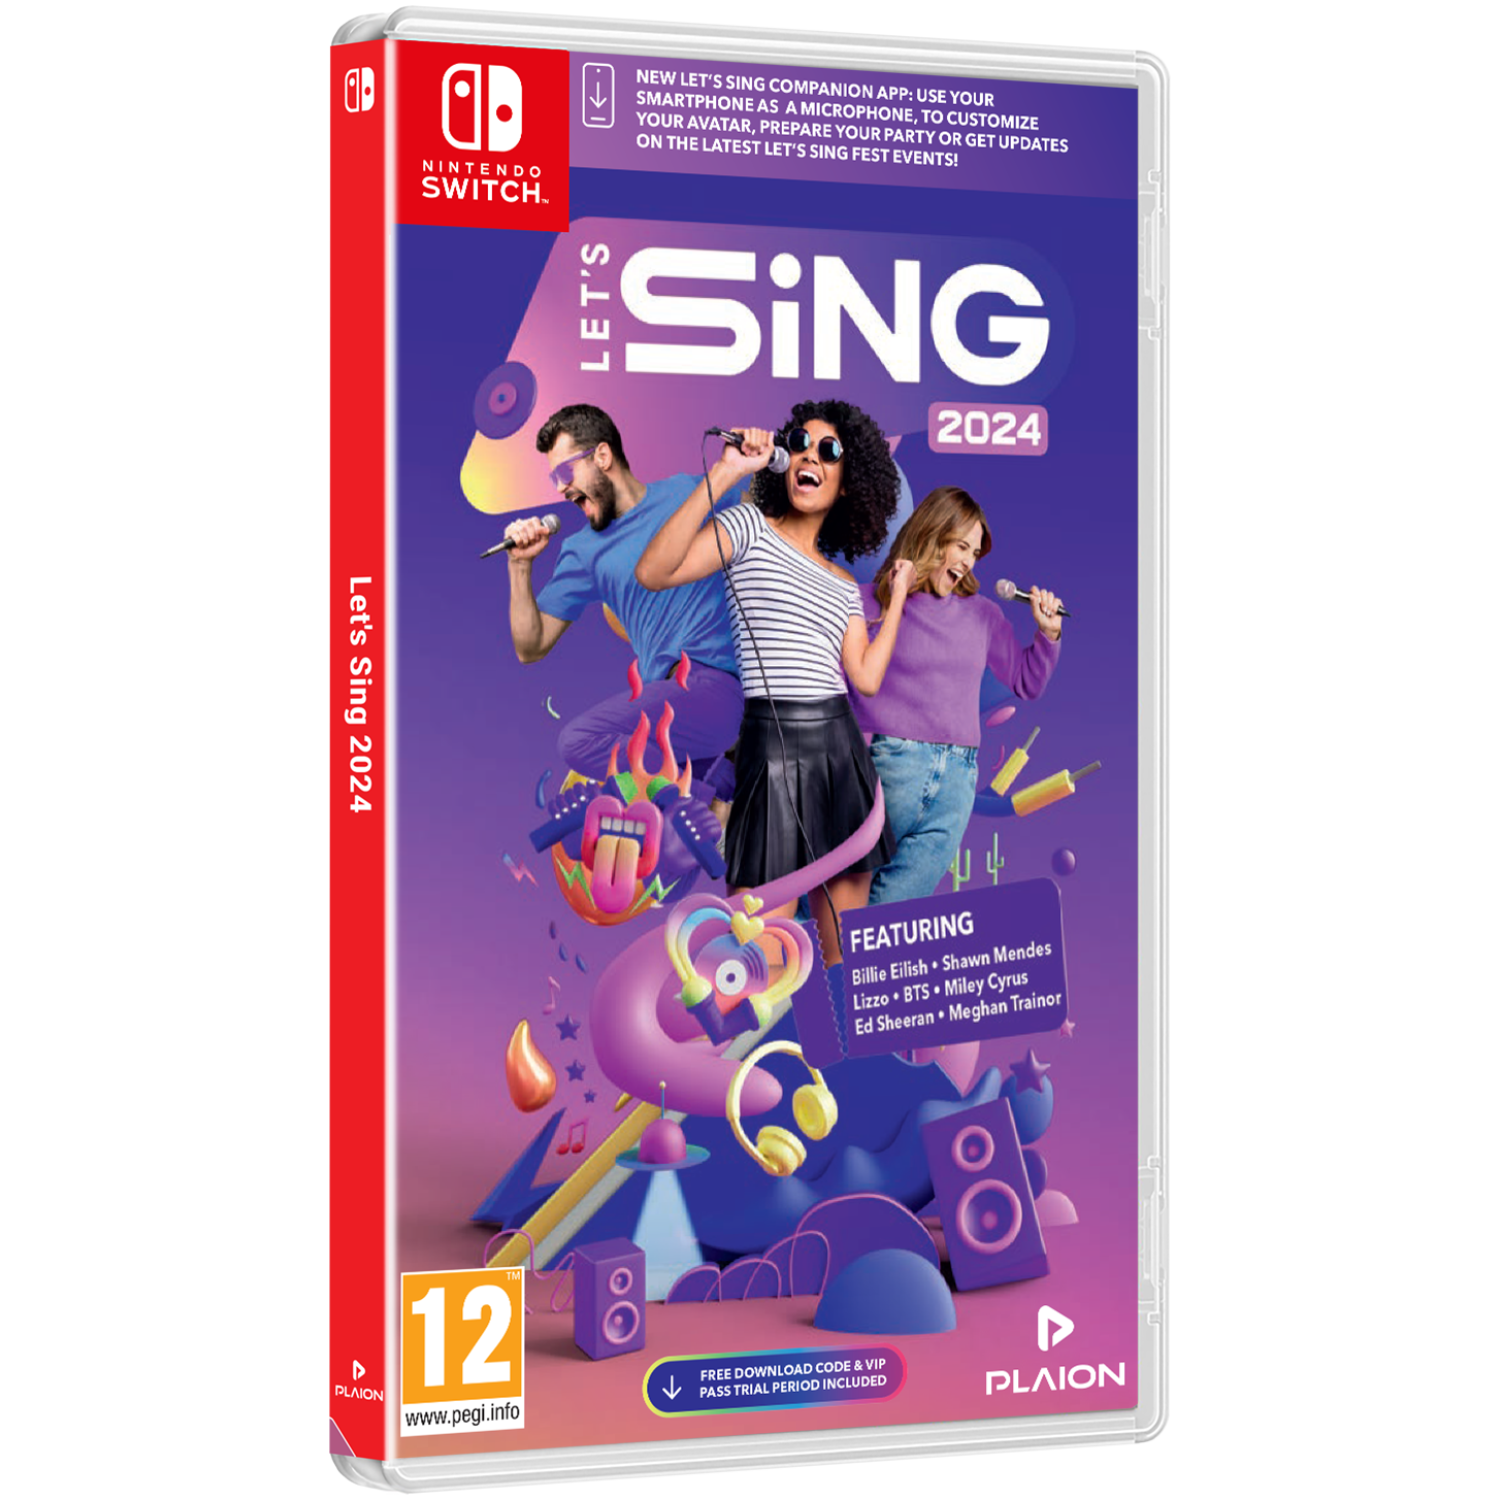 Let's Sing 2024 (Nintendo Switch)